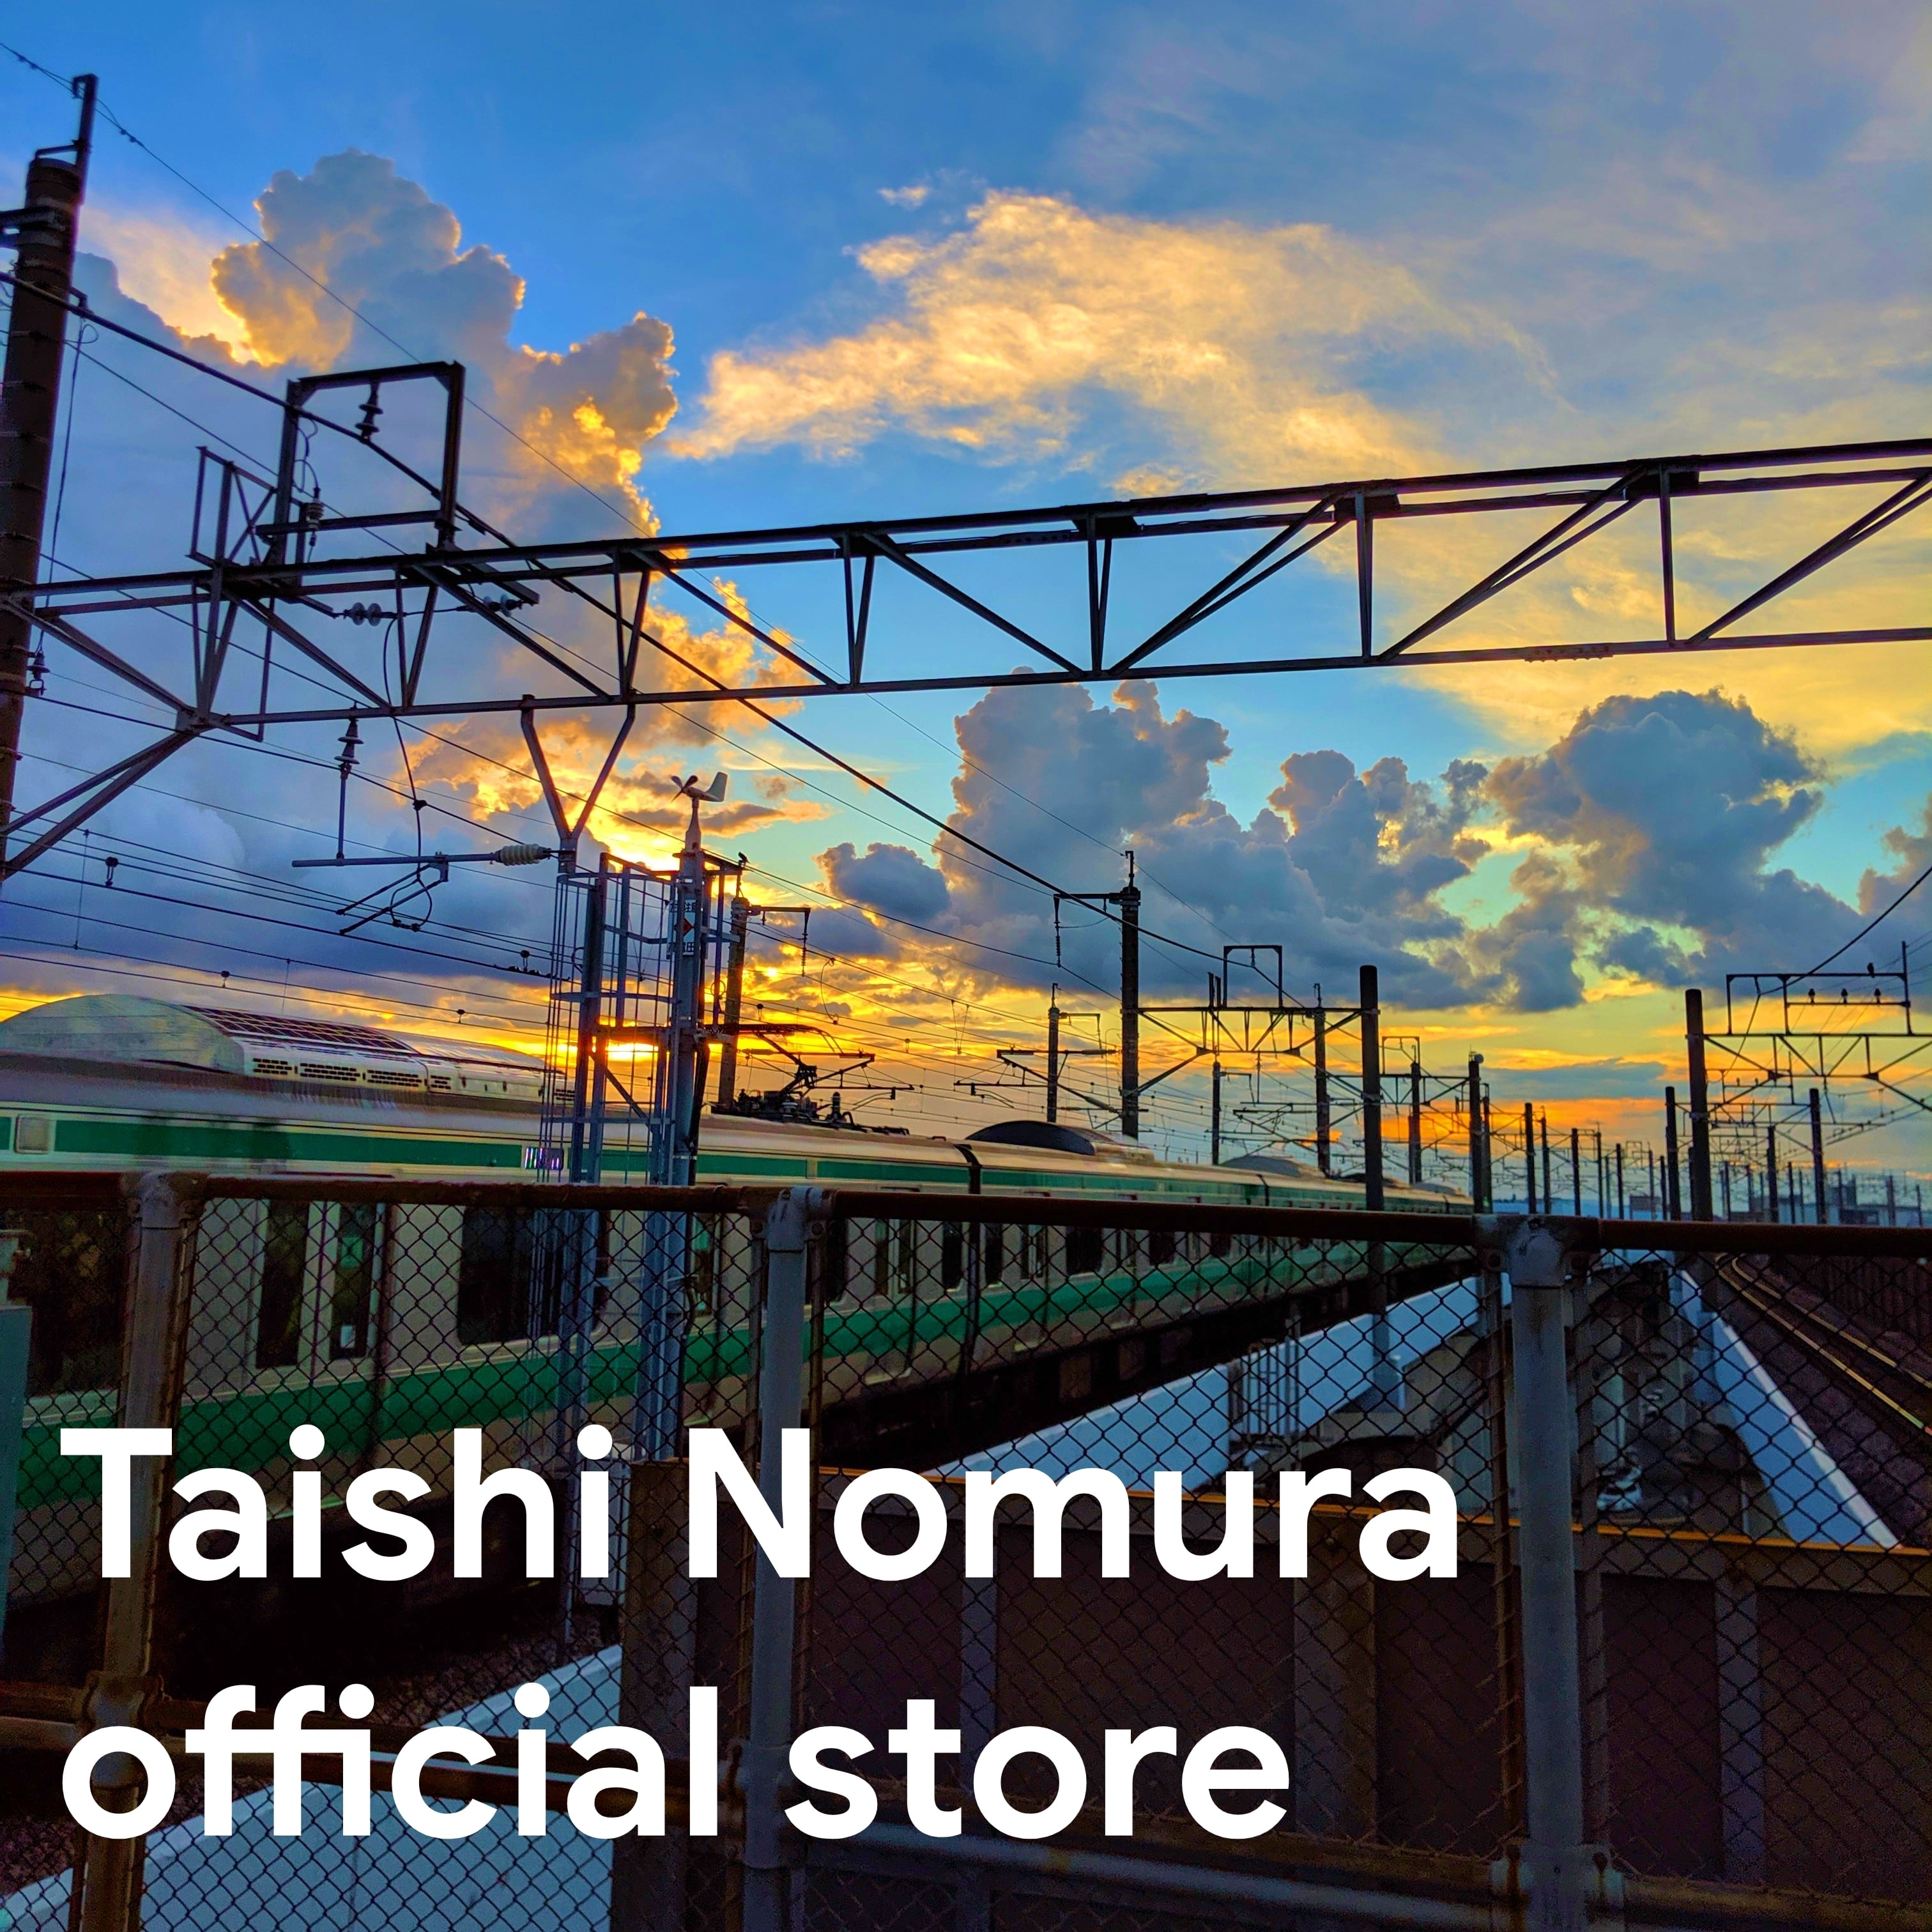 Taishi Nomura official store